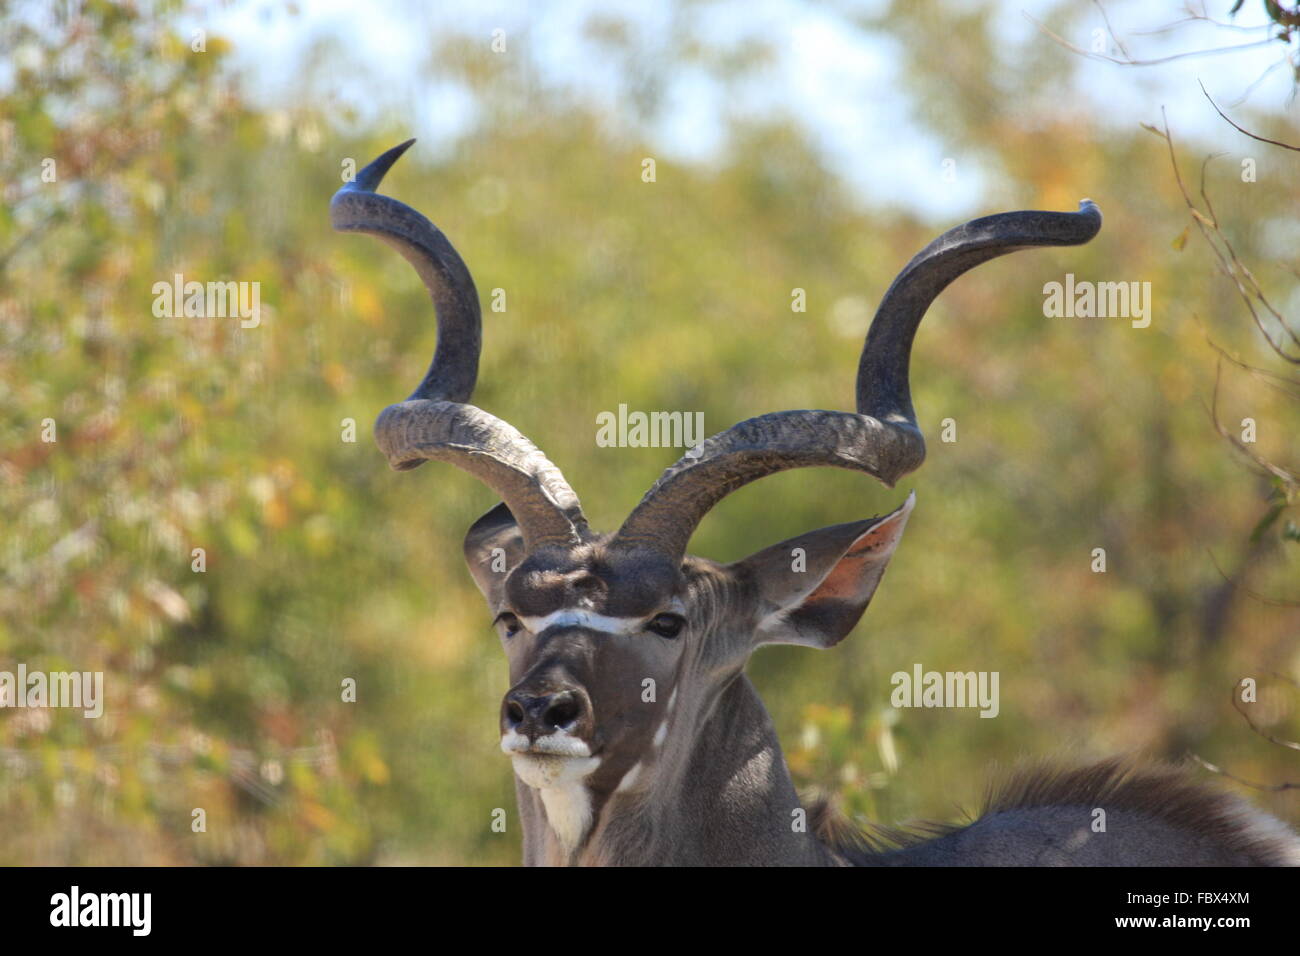 Kudu Antilope Stock Photo